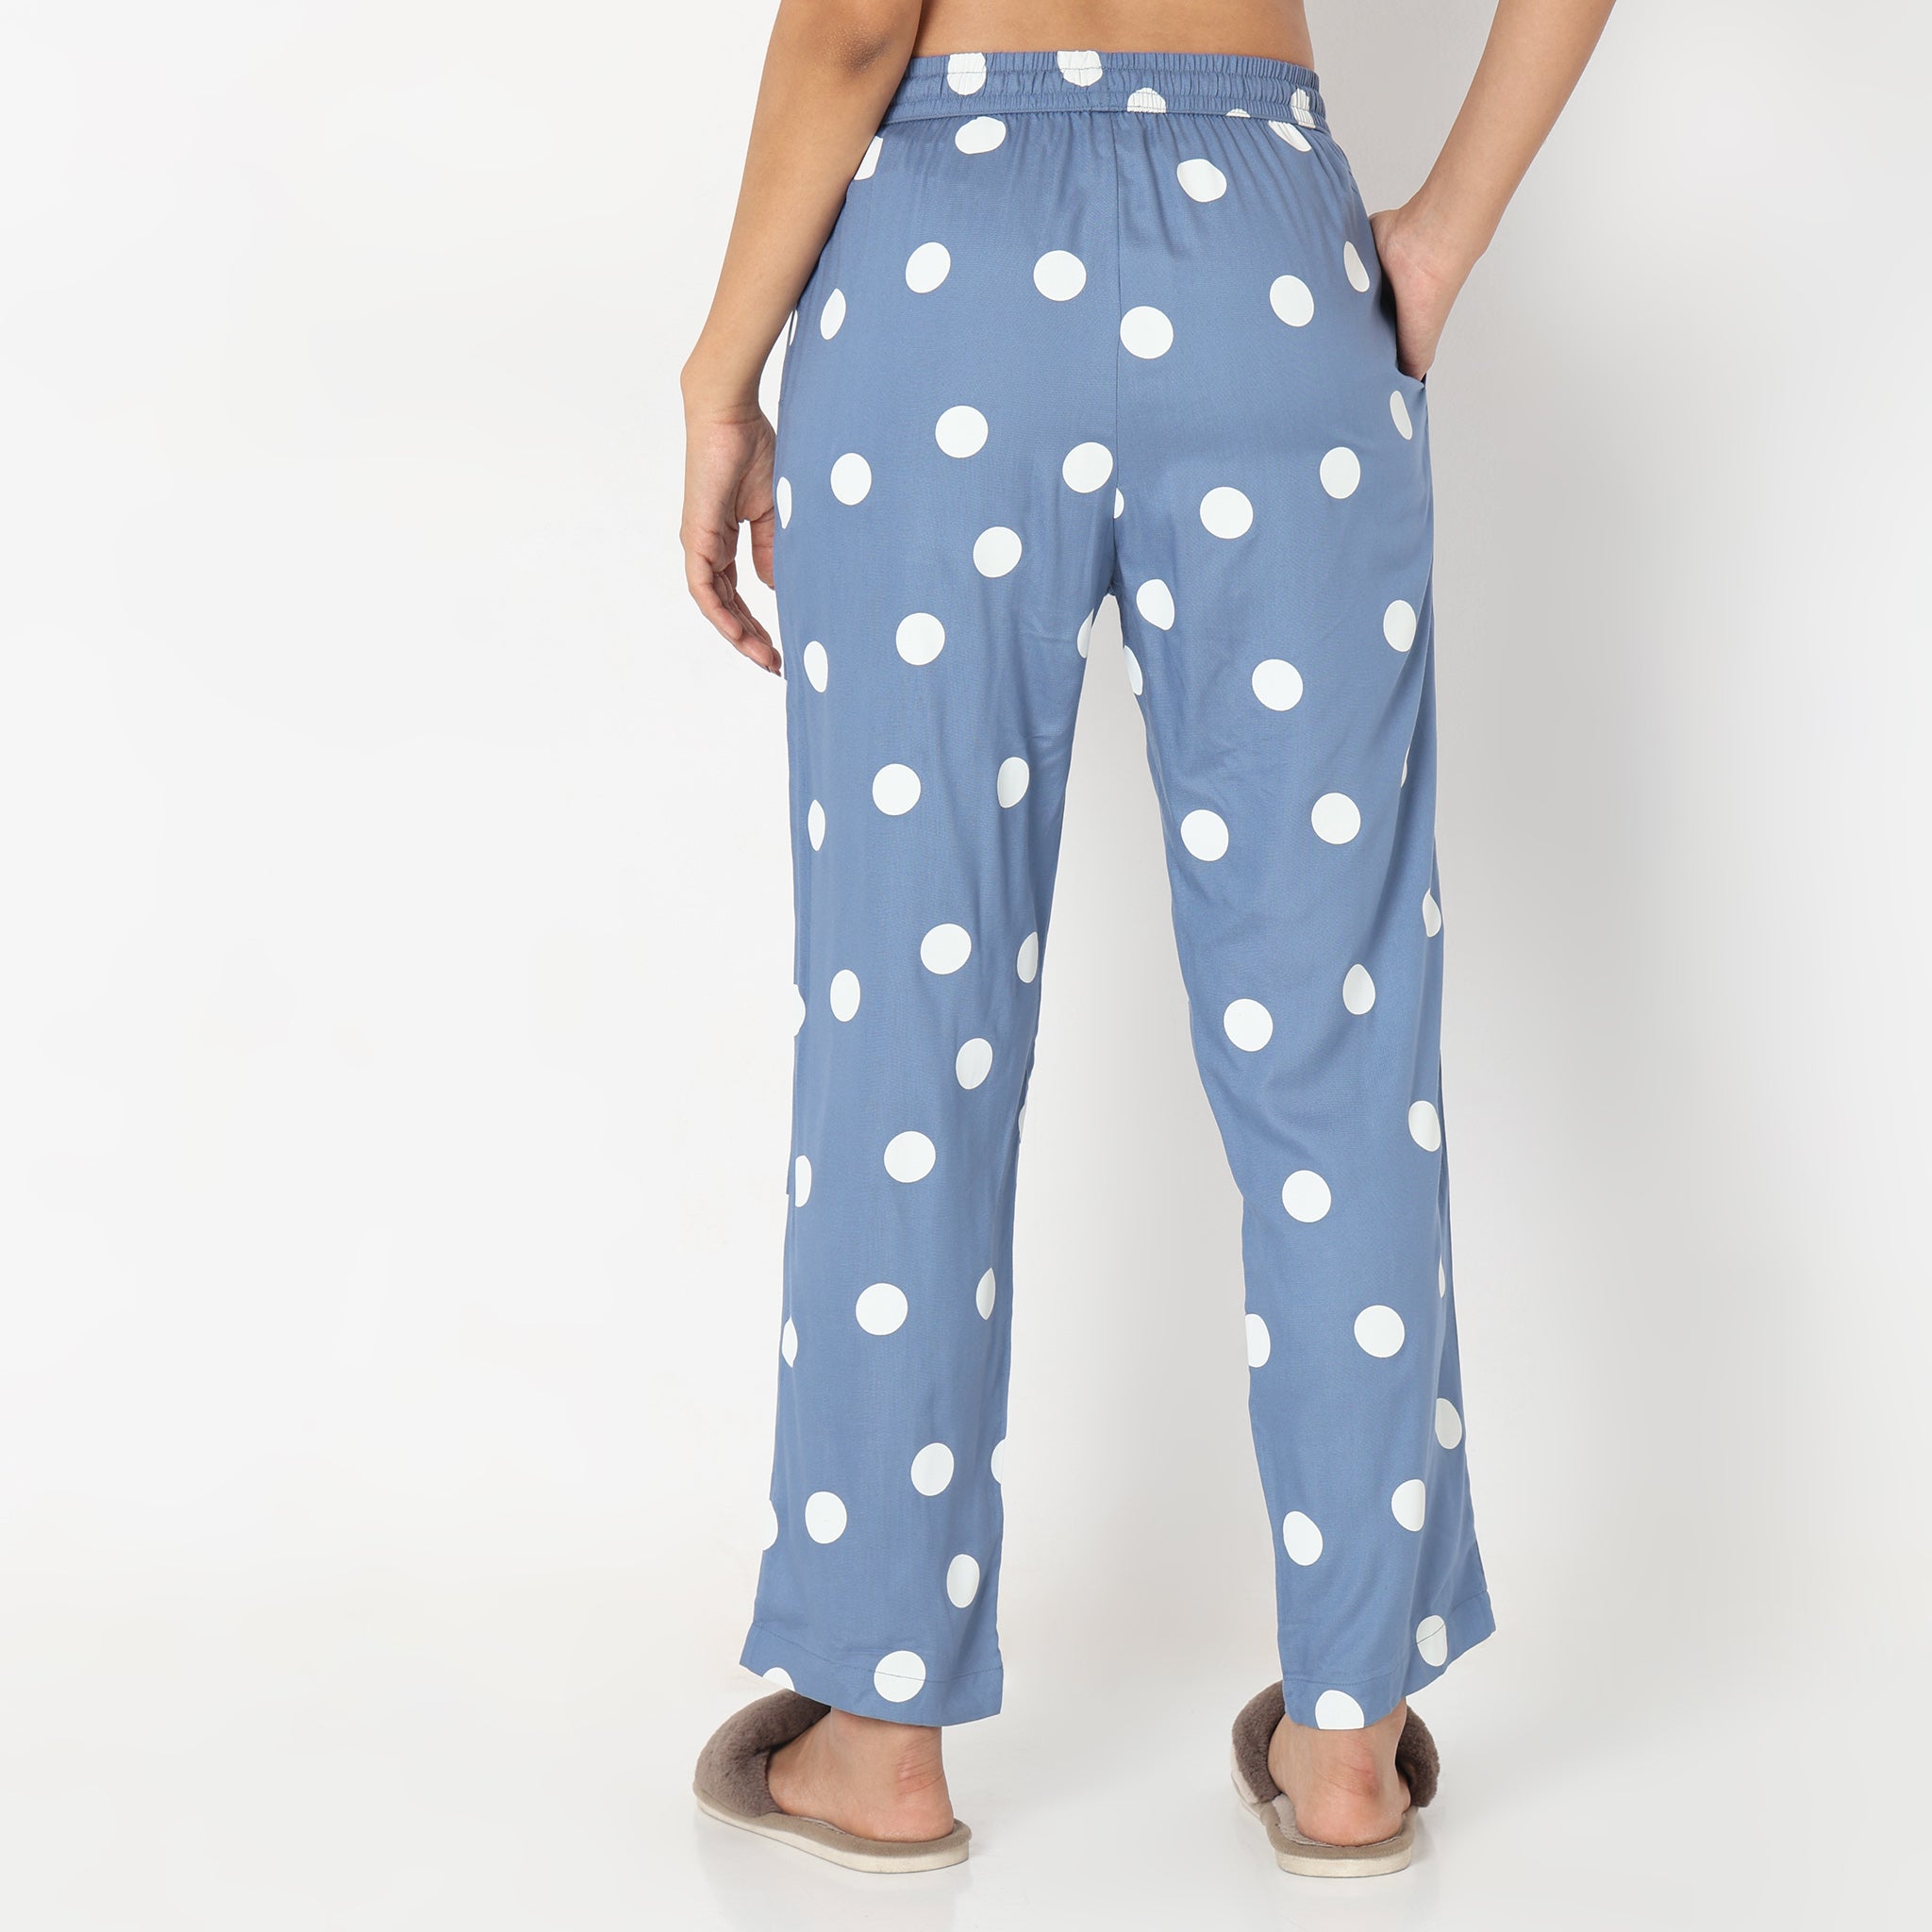 Regular Fit Polka Dot Sleepwear Sets